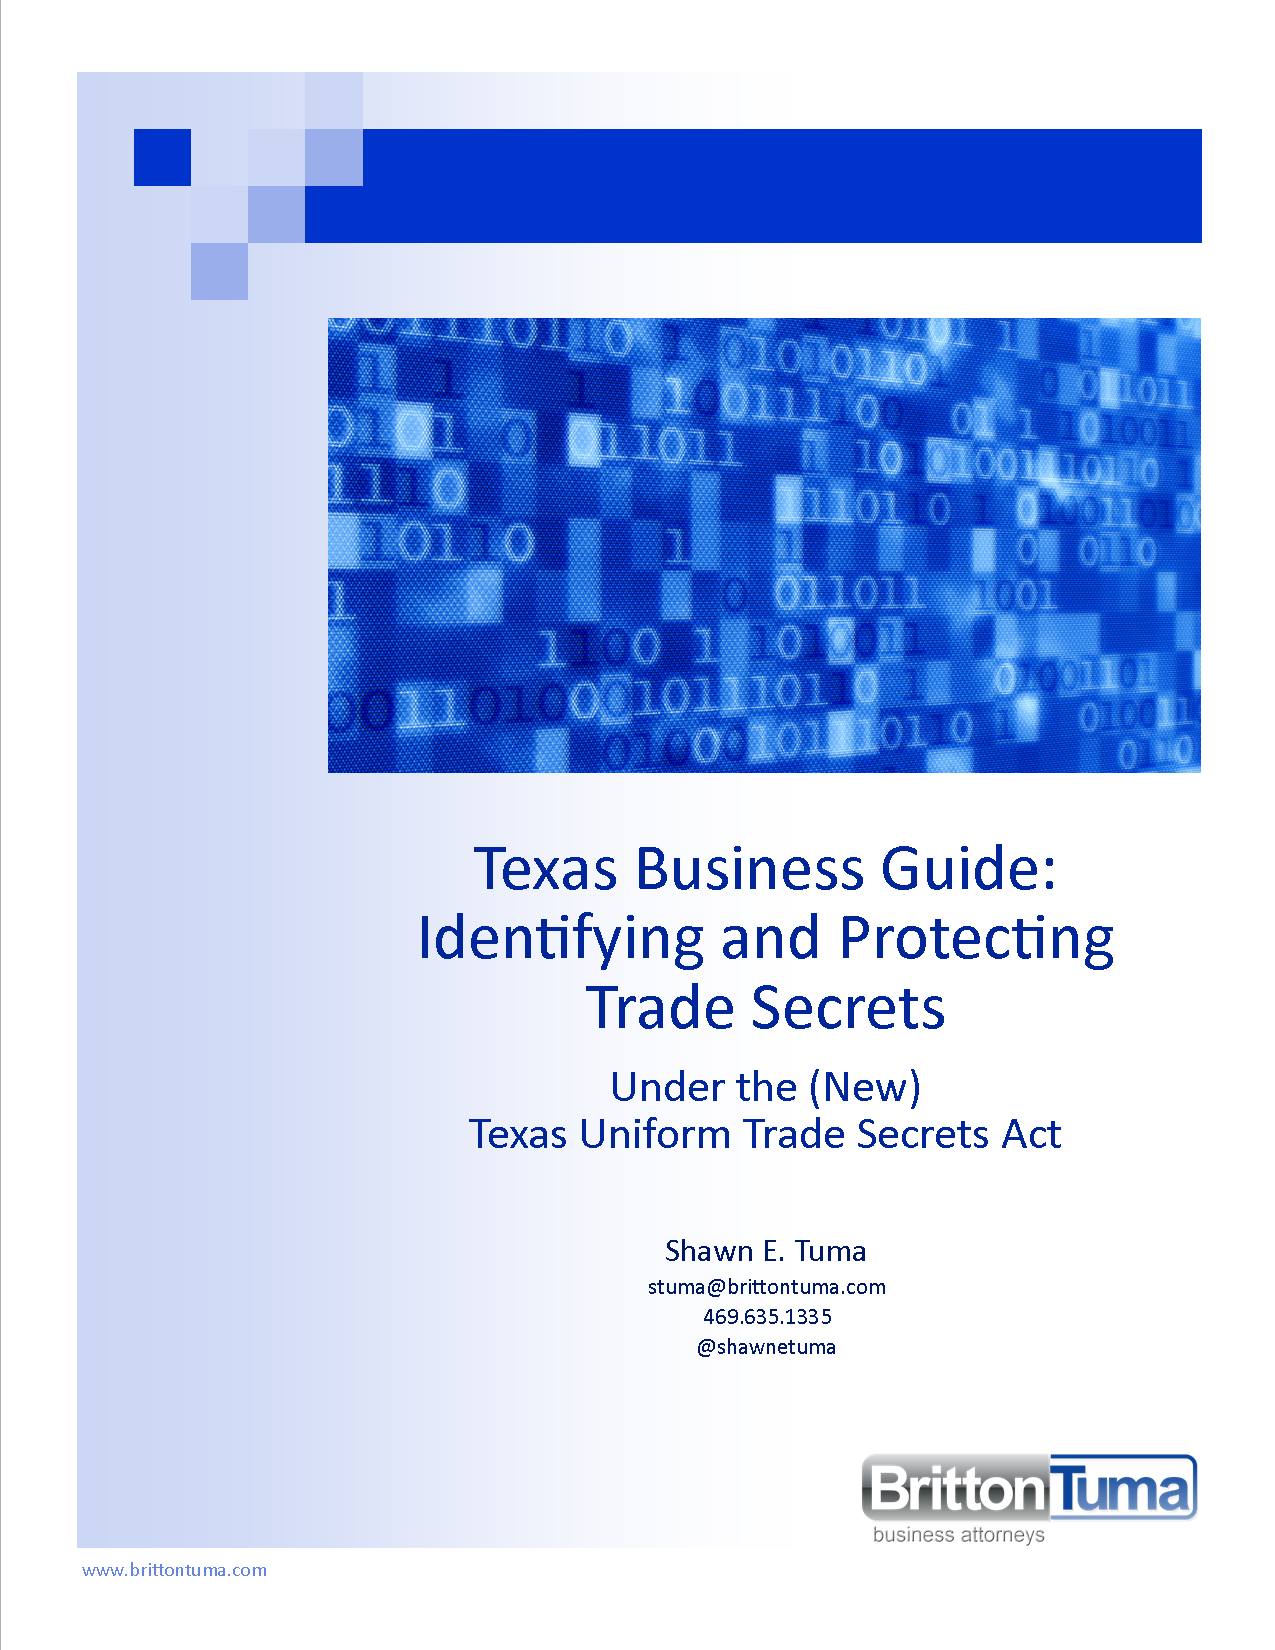 The Uniform Trade Secrets Act 114